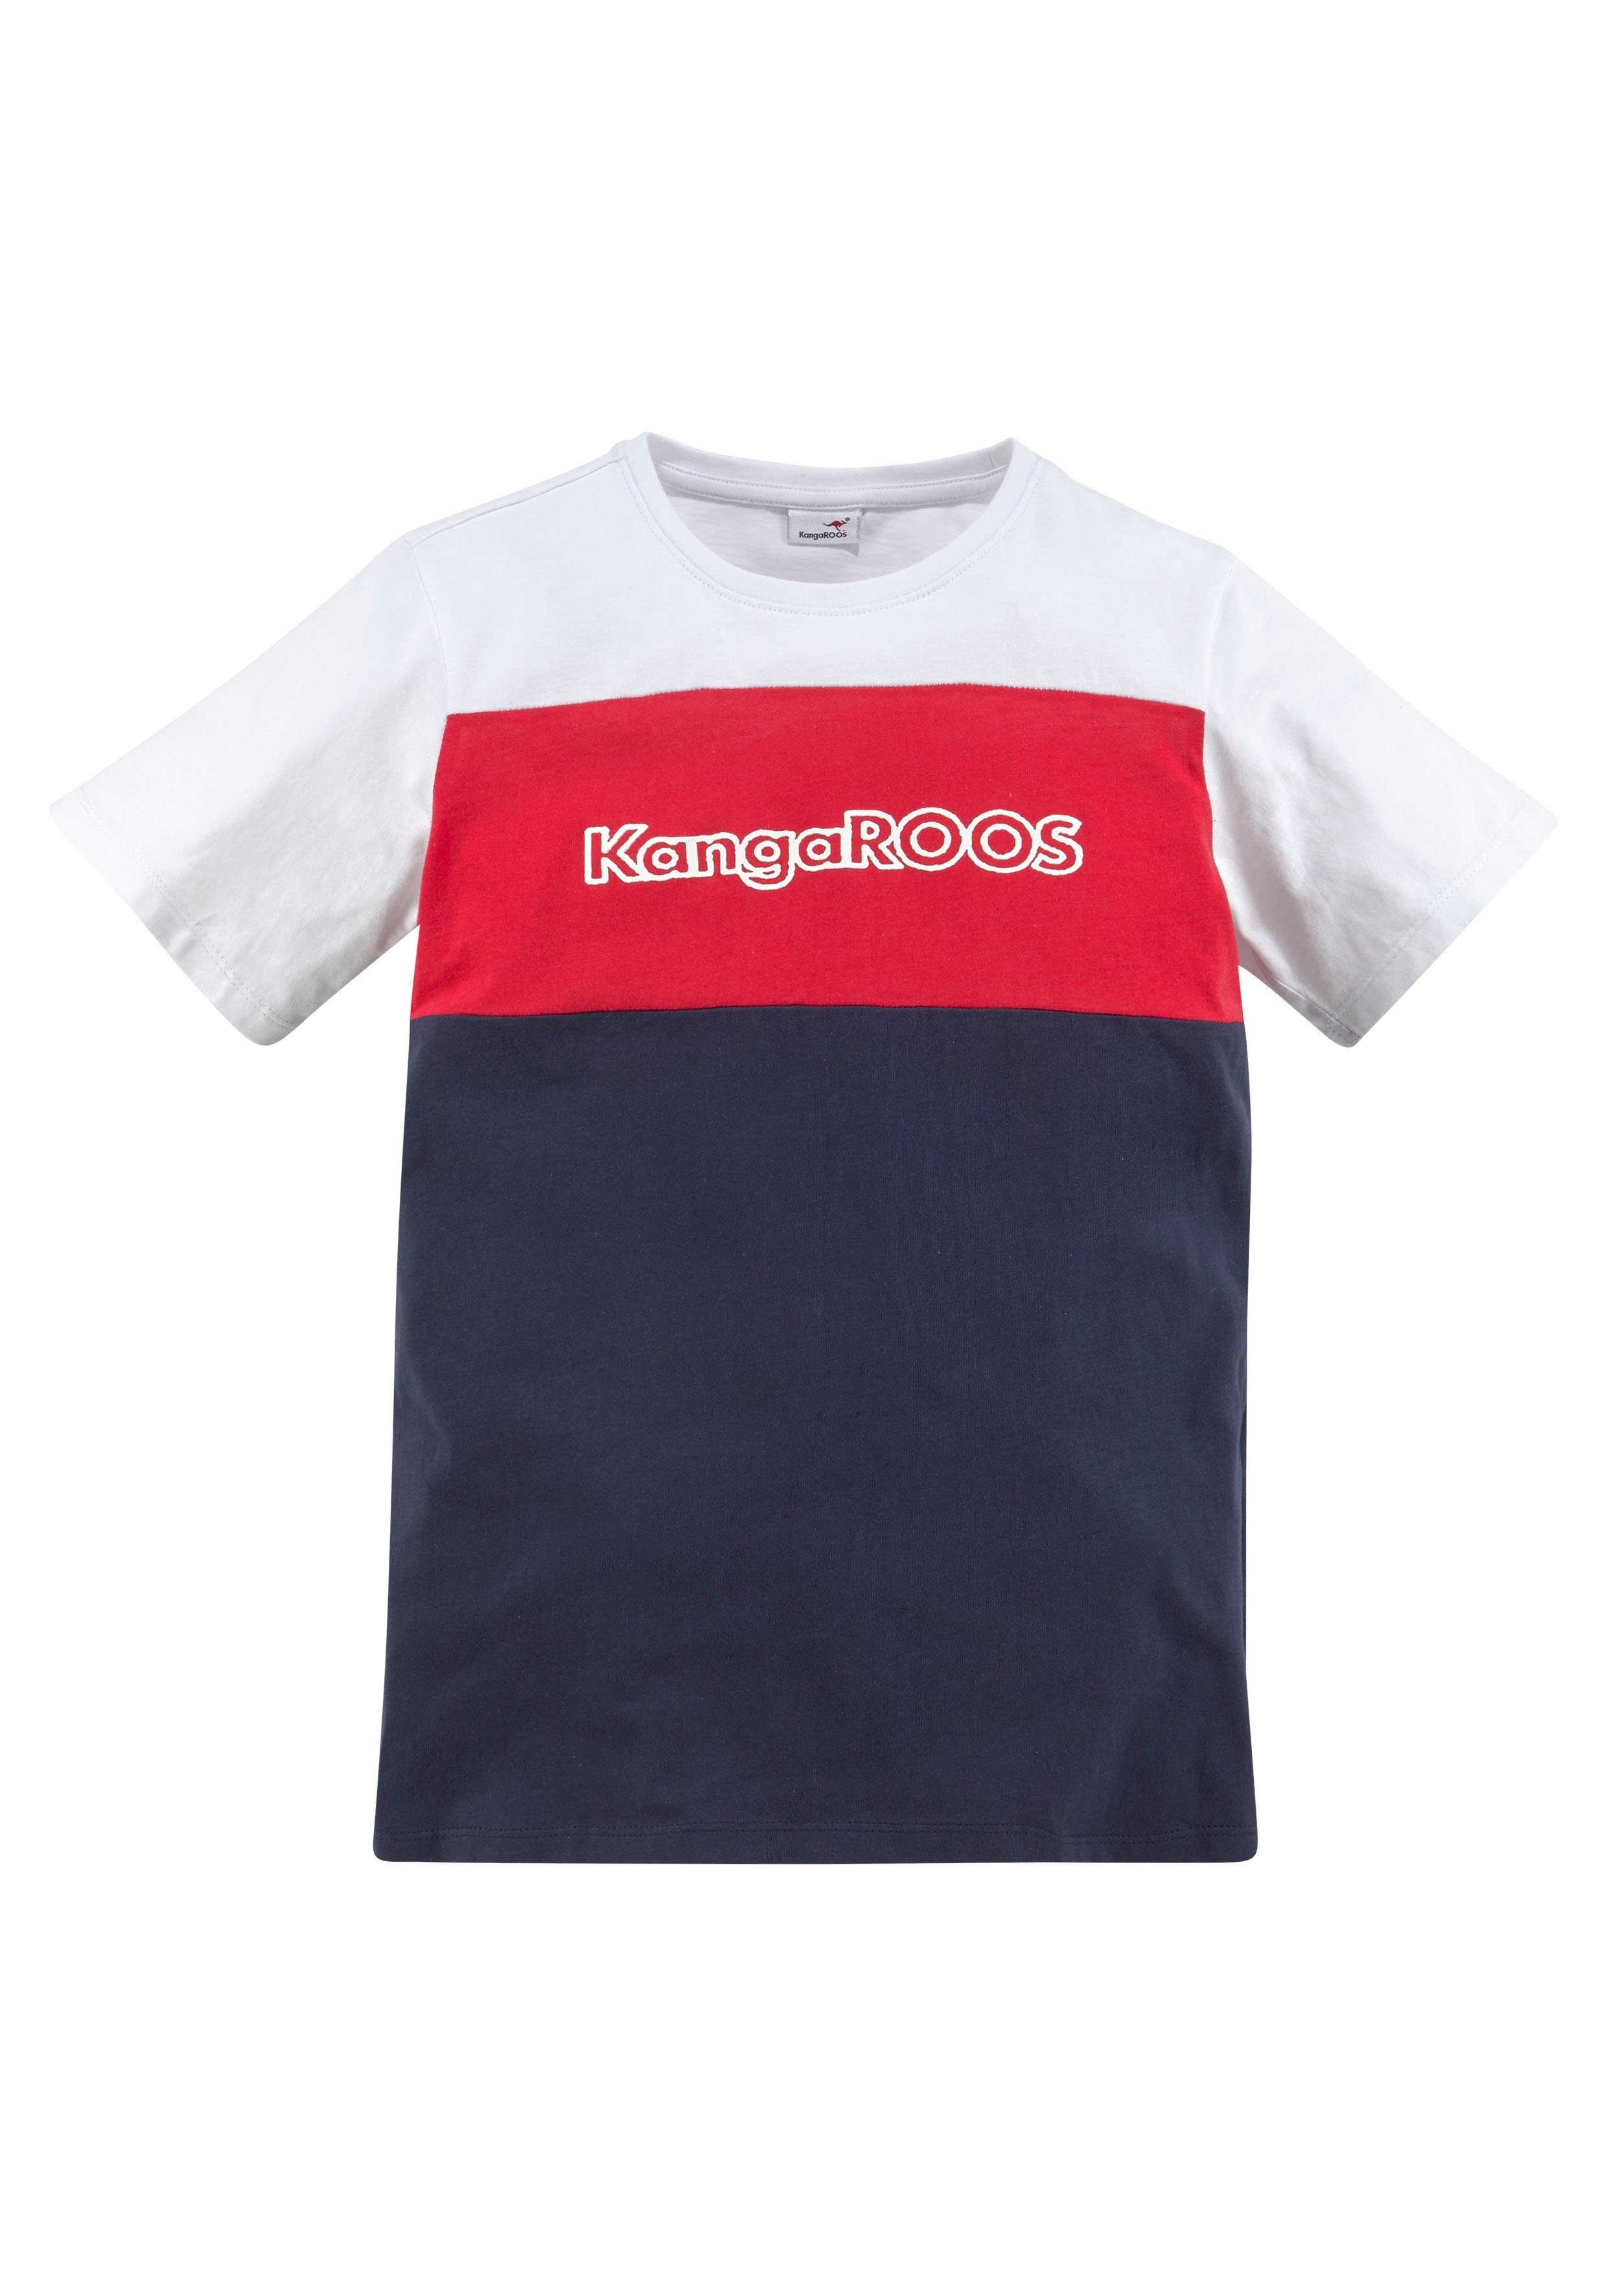 KangaROOS T-shirt In Colorblockdesign online shoppen | OTTO